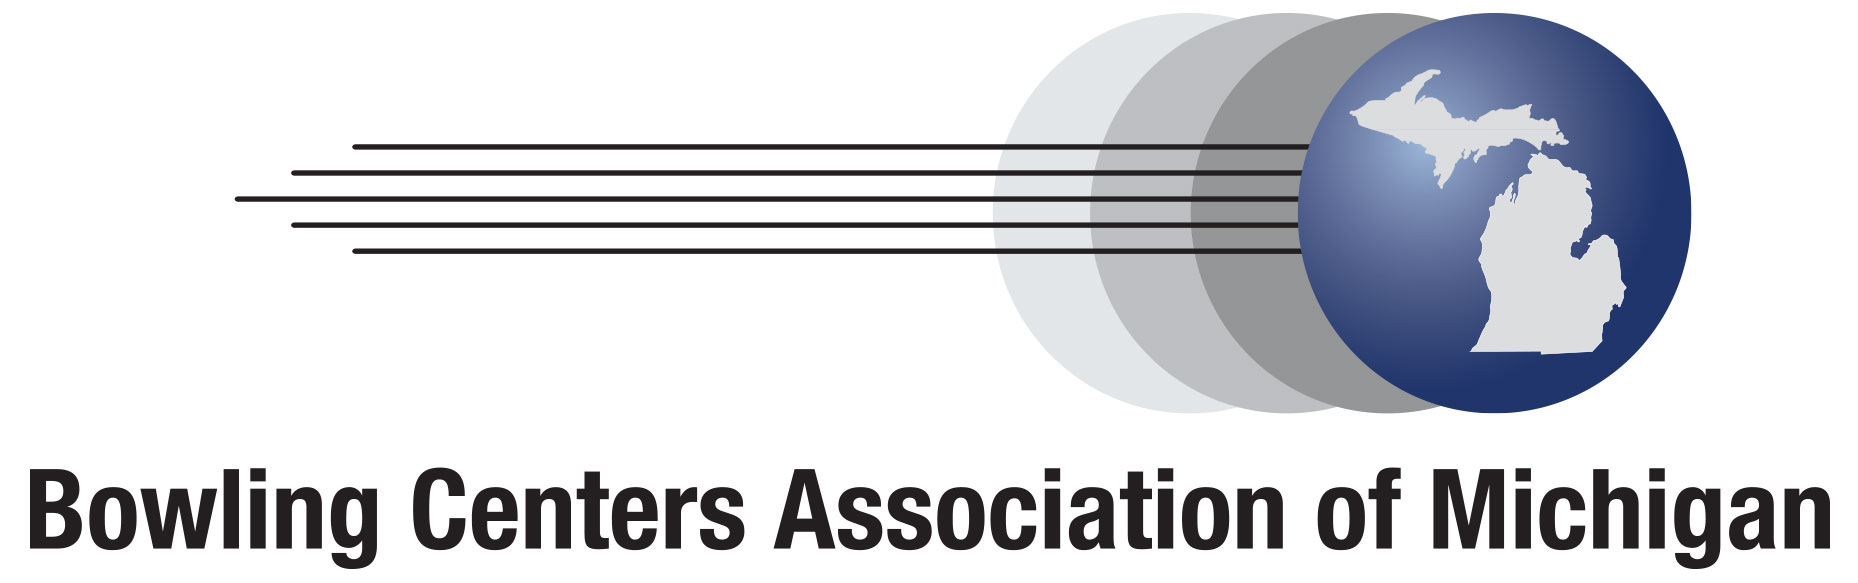 Bowling Centers Association of Michigan